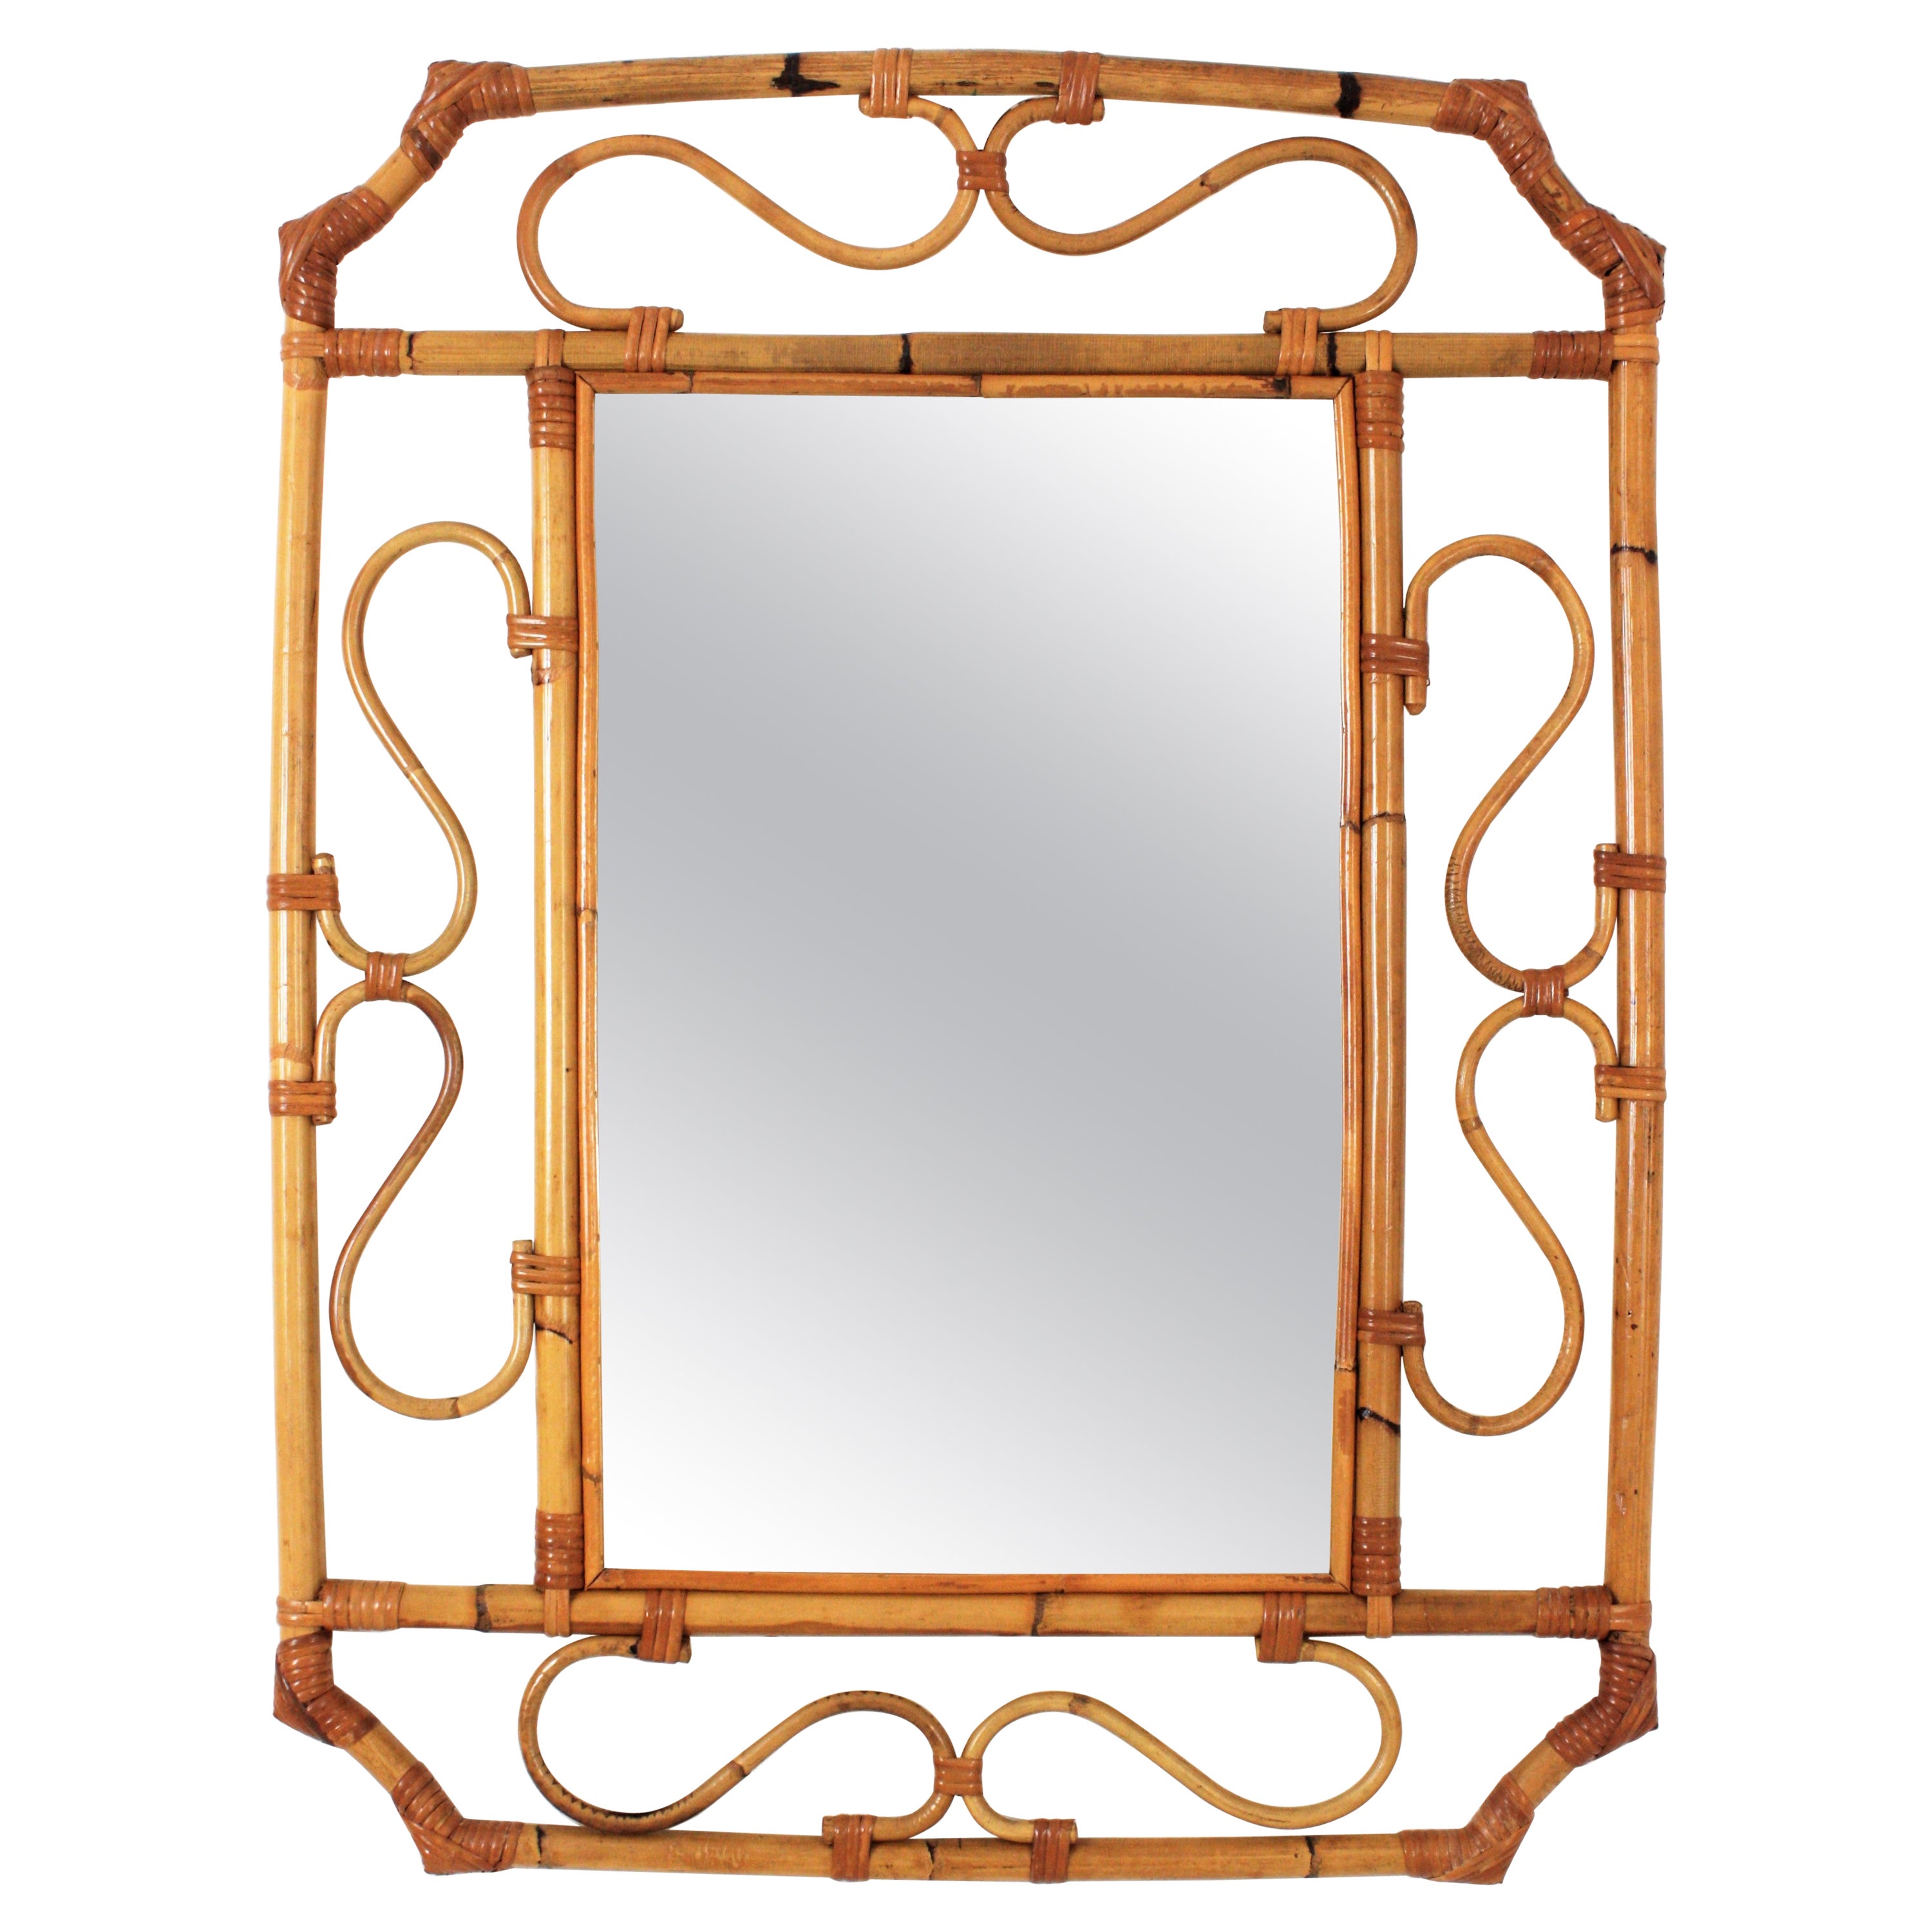 Franco Albini Style Rattan Octagonal Mirror, Italy, 1960s